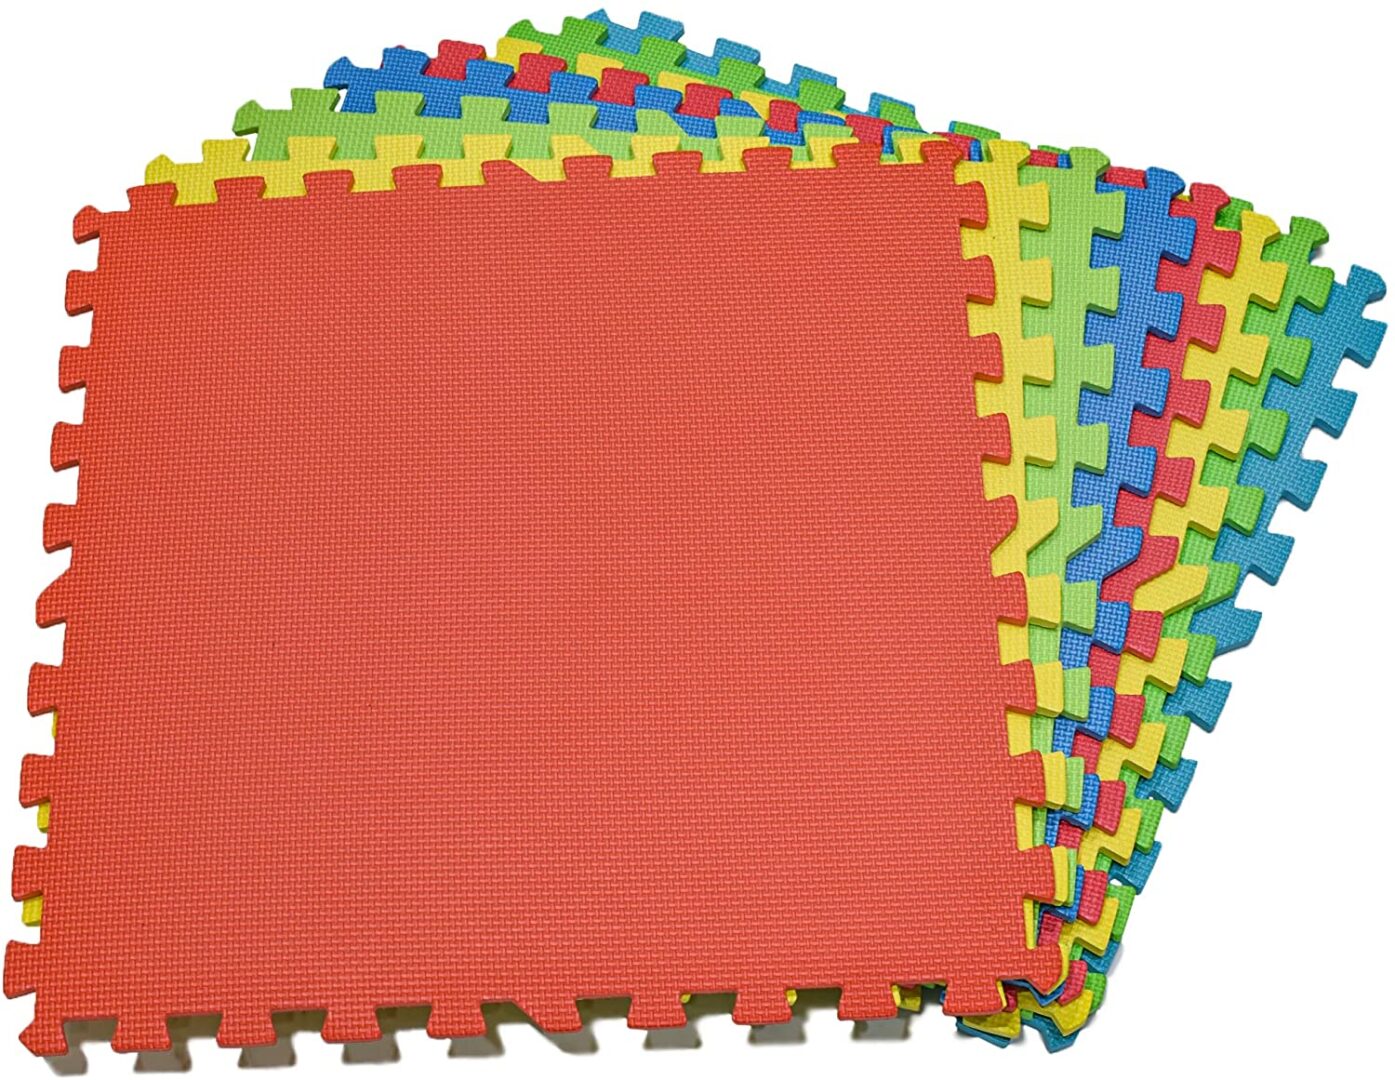 Extra Large Thick Eva Foam Mat Soft Floor Tiles Interlocking Play Kids Baby UK 